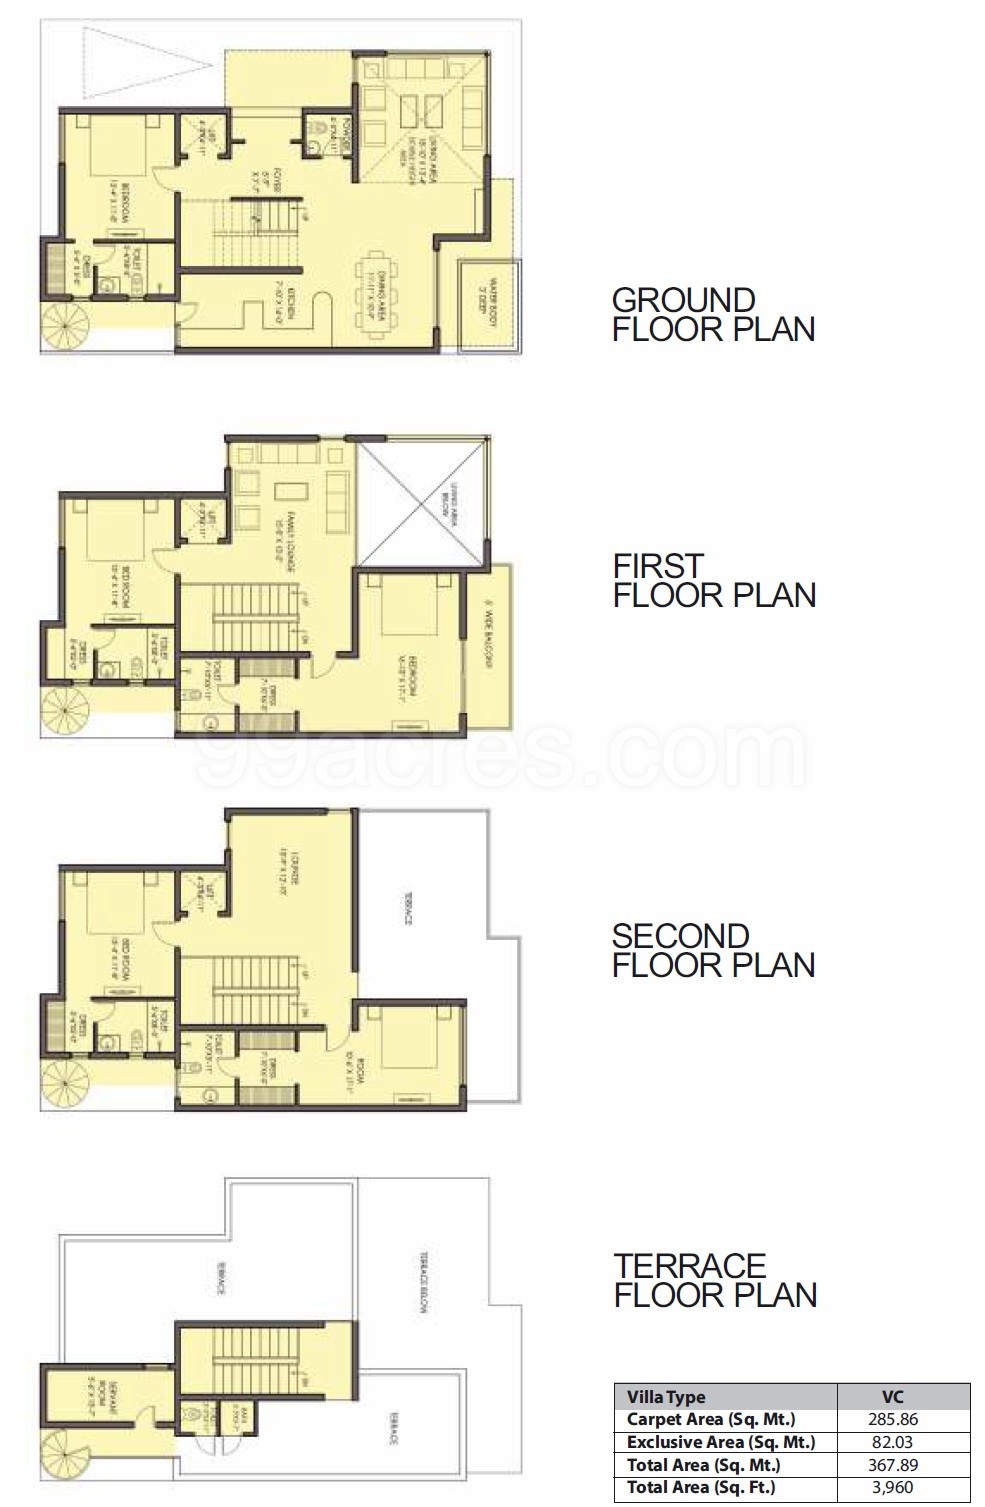 Rit Residence Halls Floor Plans Carpet Vidalondon